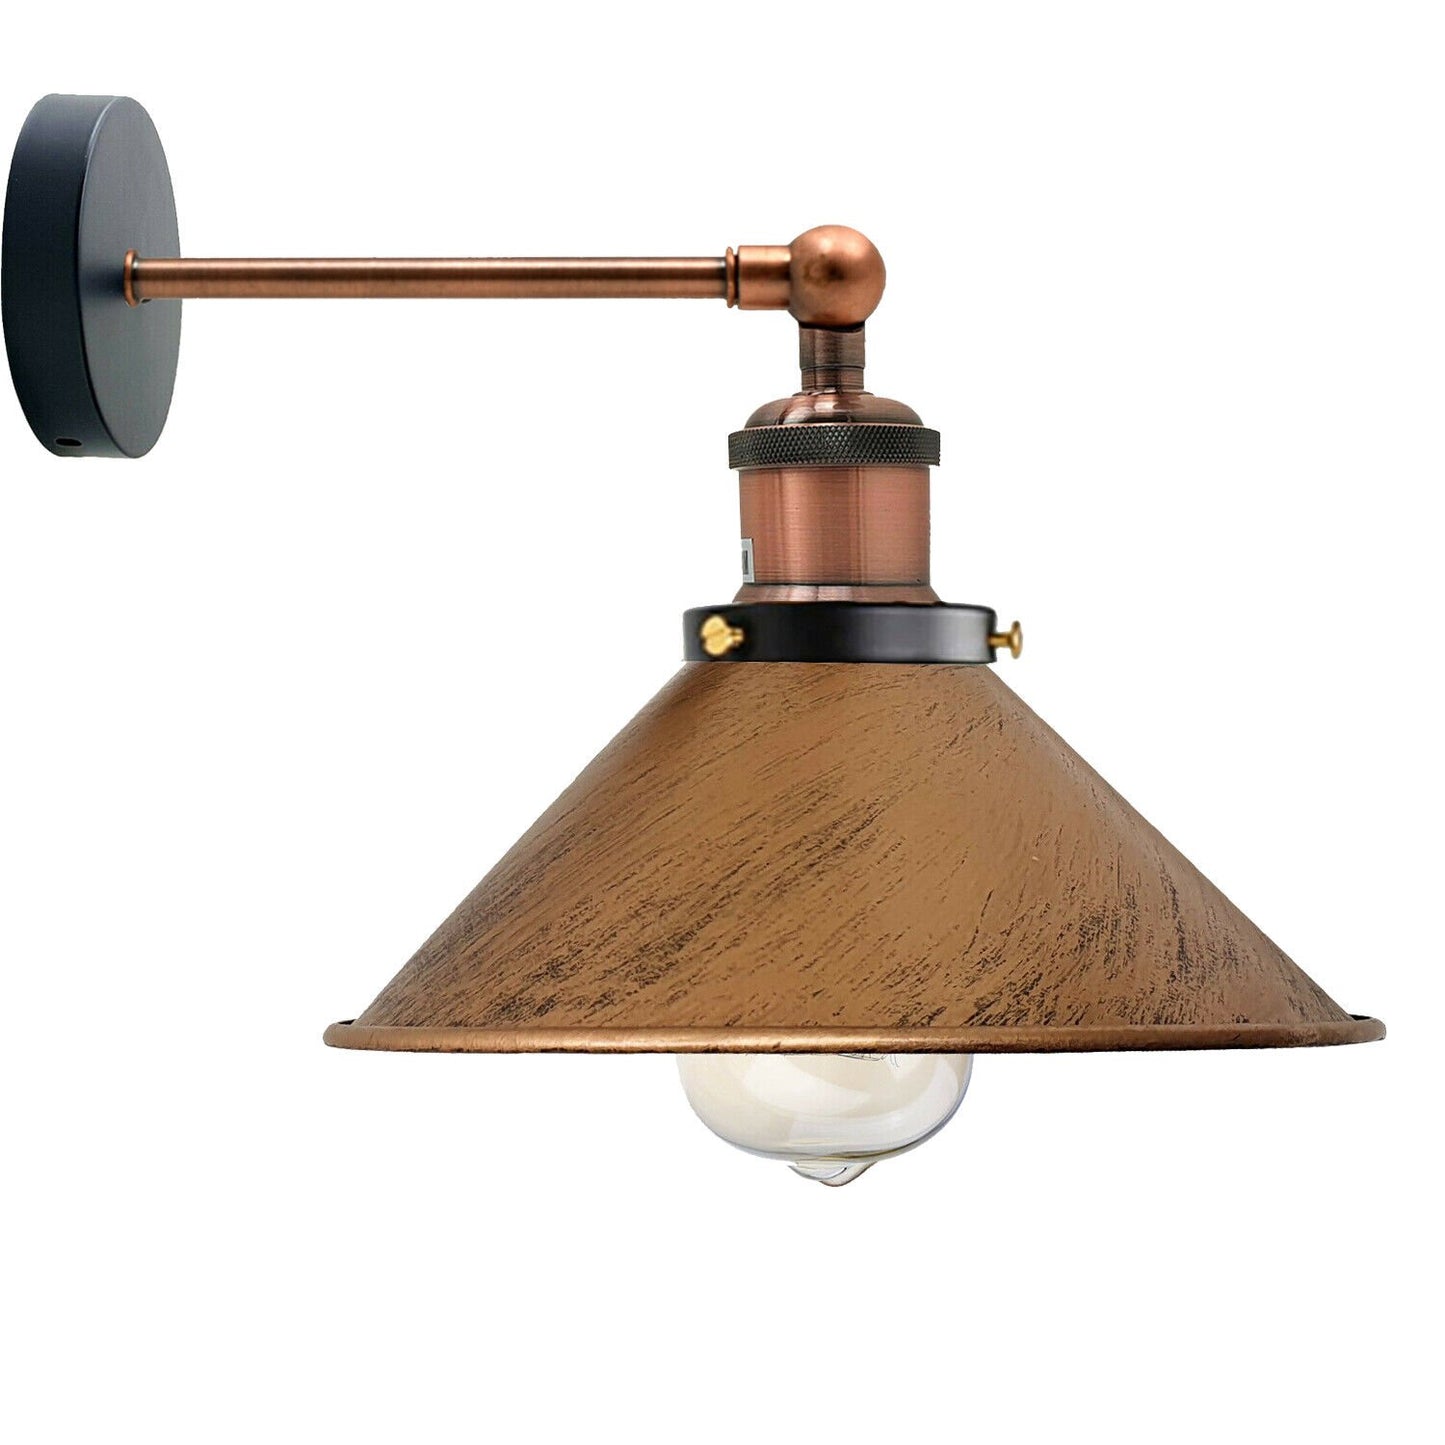 Brushed Copper Metal Cone Wall Scones Lamp.JPG